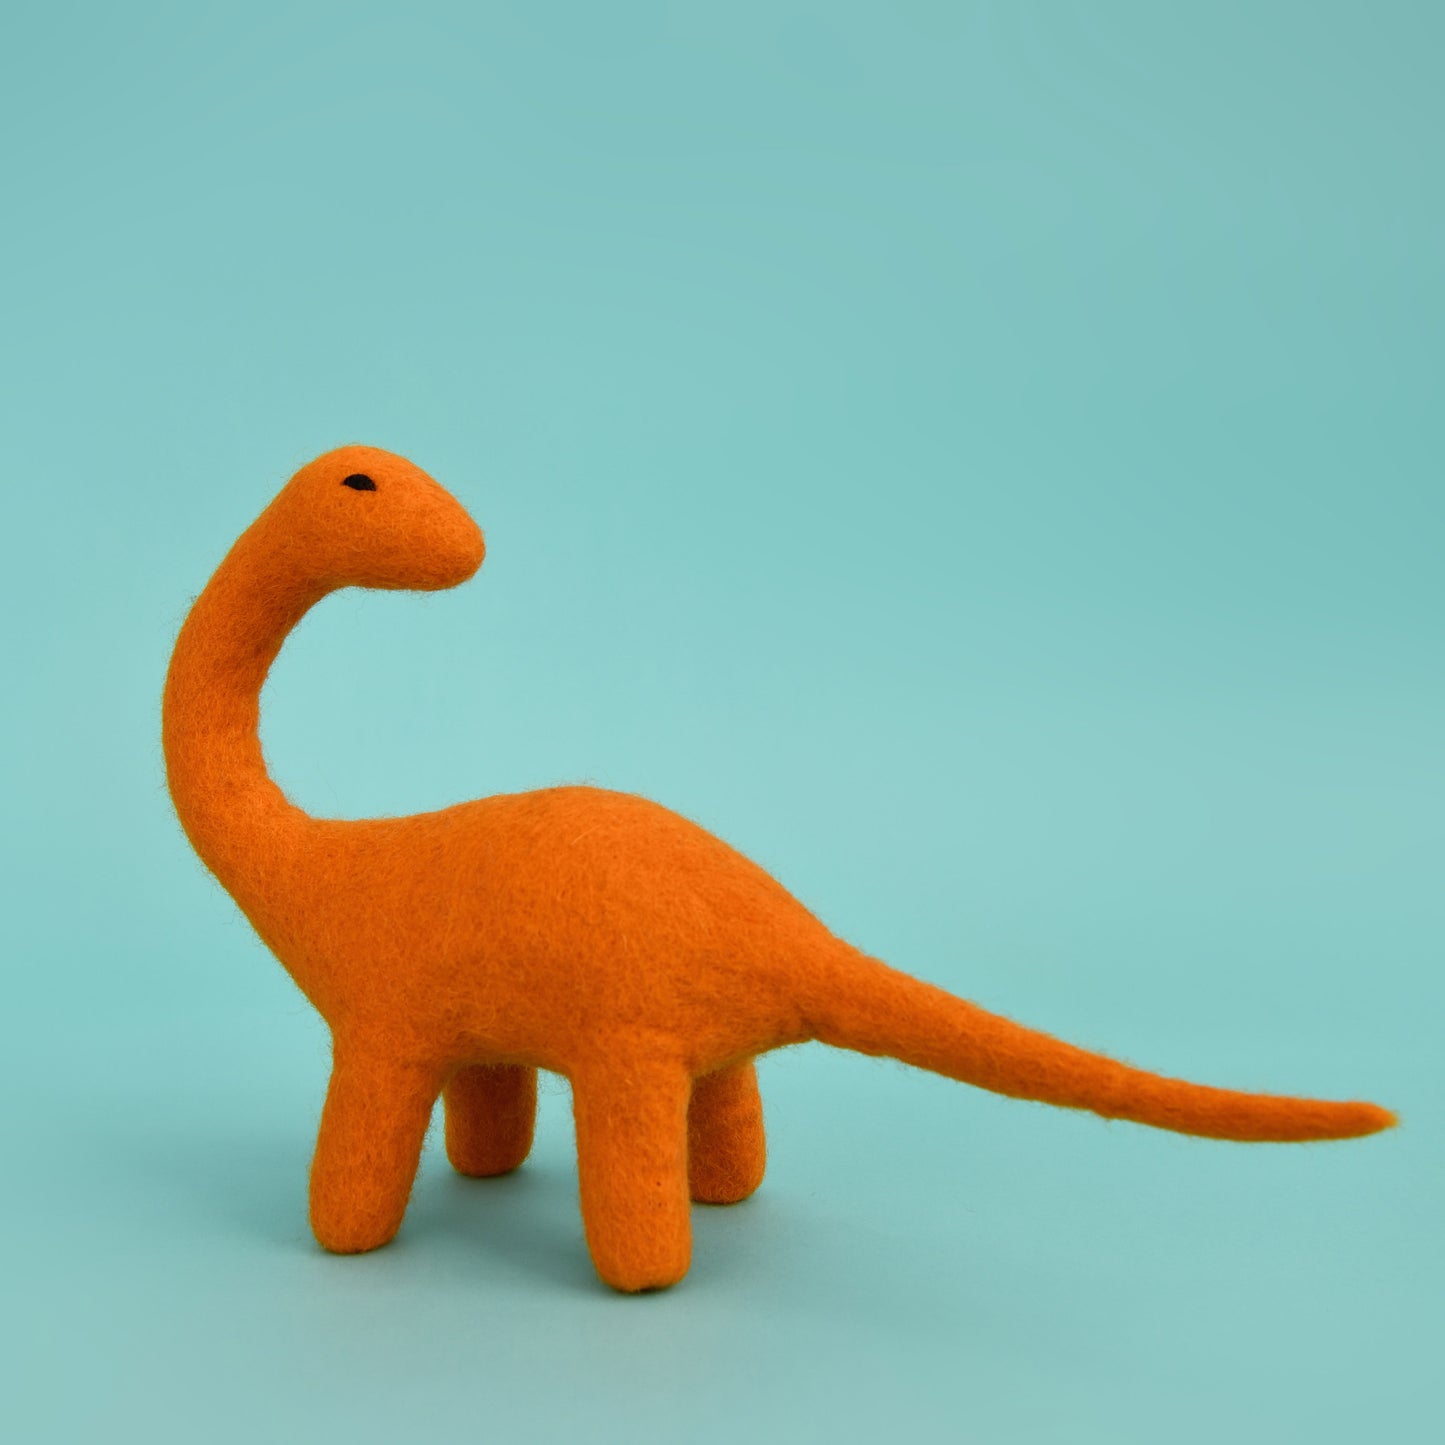 Daredevil Dinosaur - Orange Brontosaurus